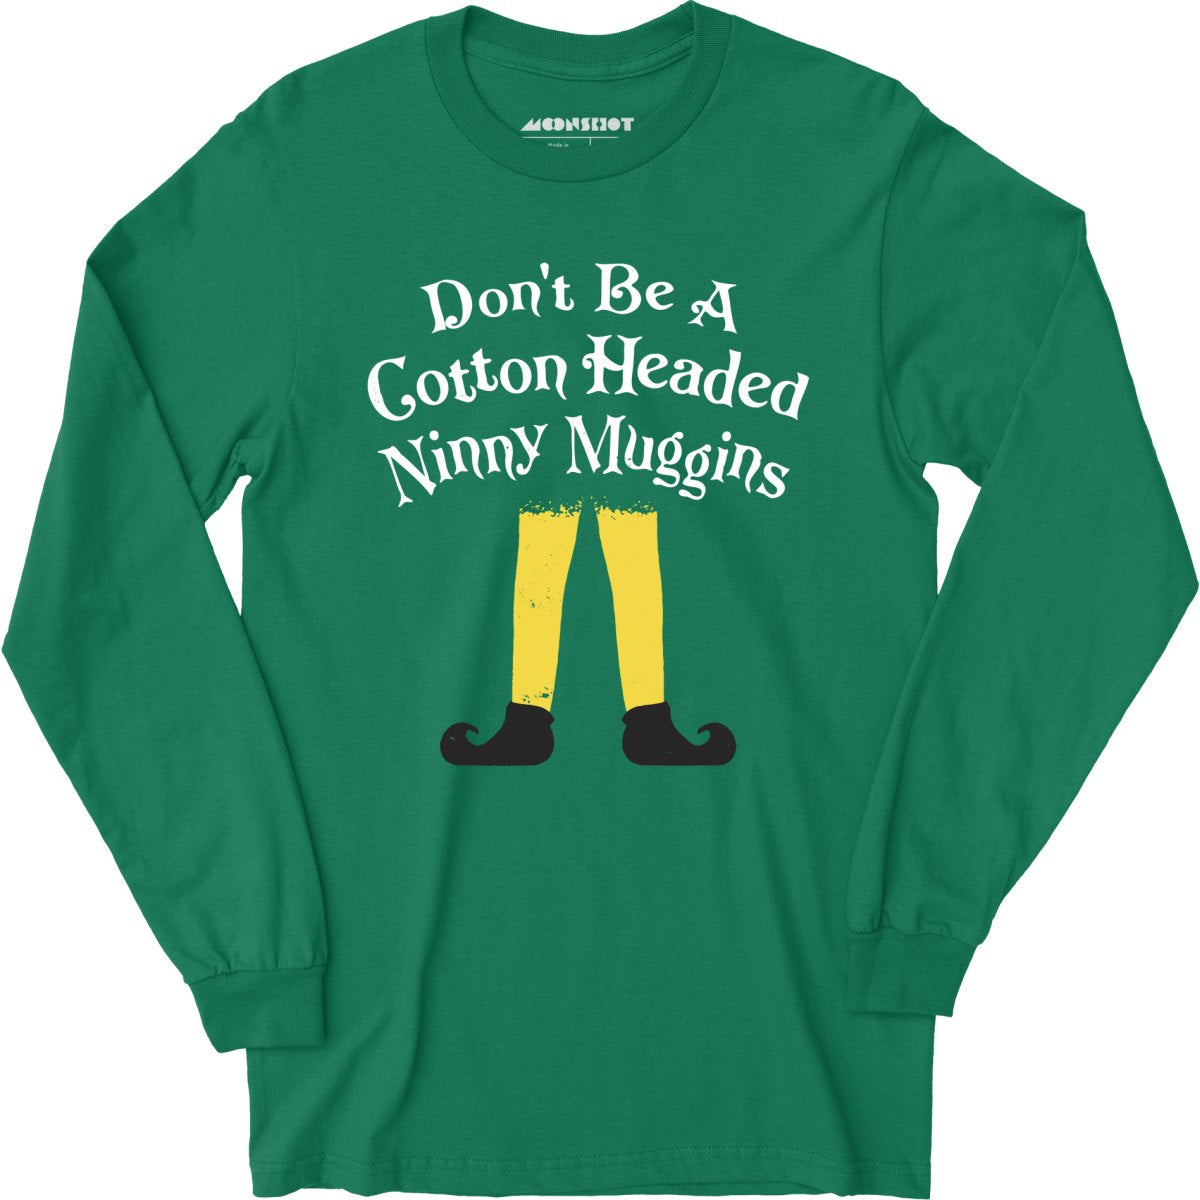 Don't Be a Cotton Headed Ninny Muggins - Long Sleeve T-Shirt